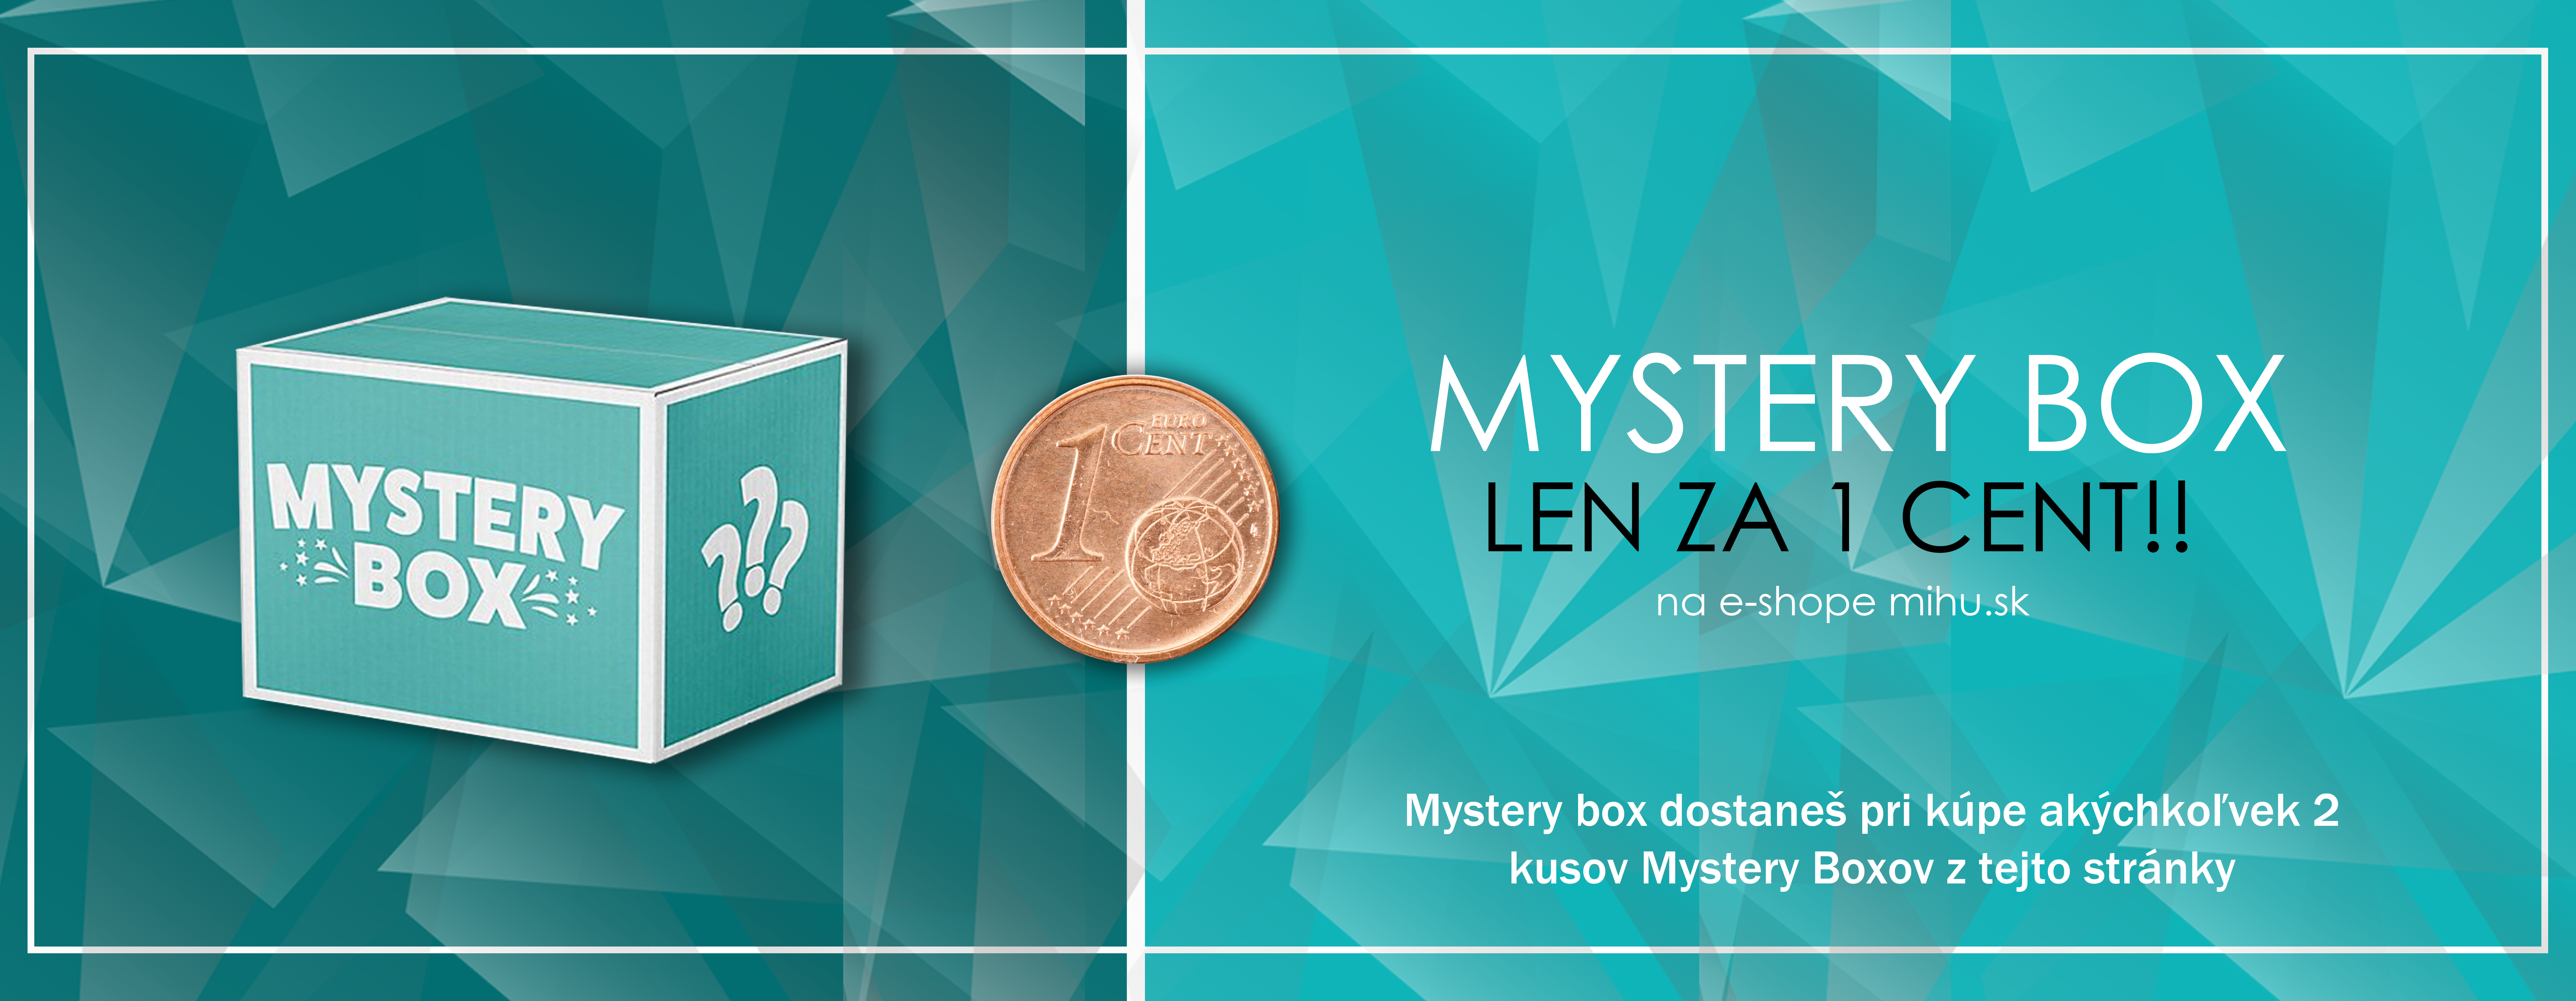 Mystery box 1 cent